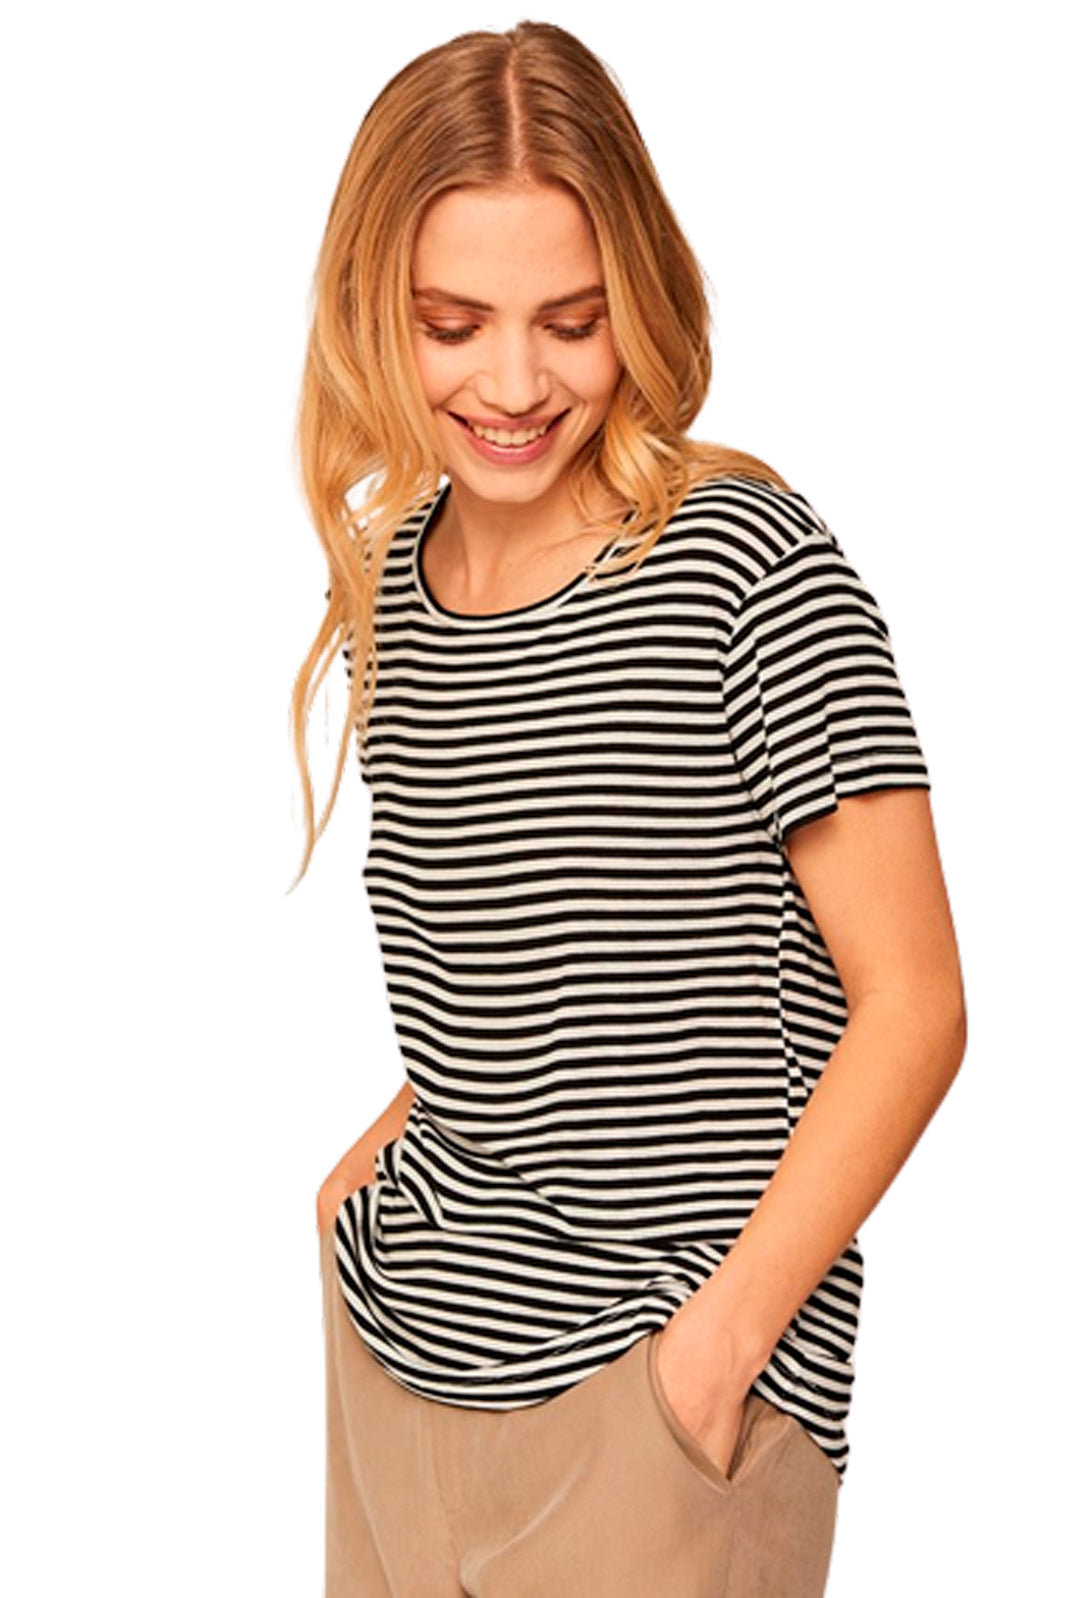 MbyM - Lucianna Air Stripe - Black Sugar Stripe T-shirts 